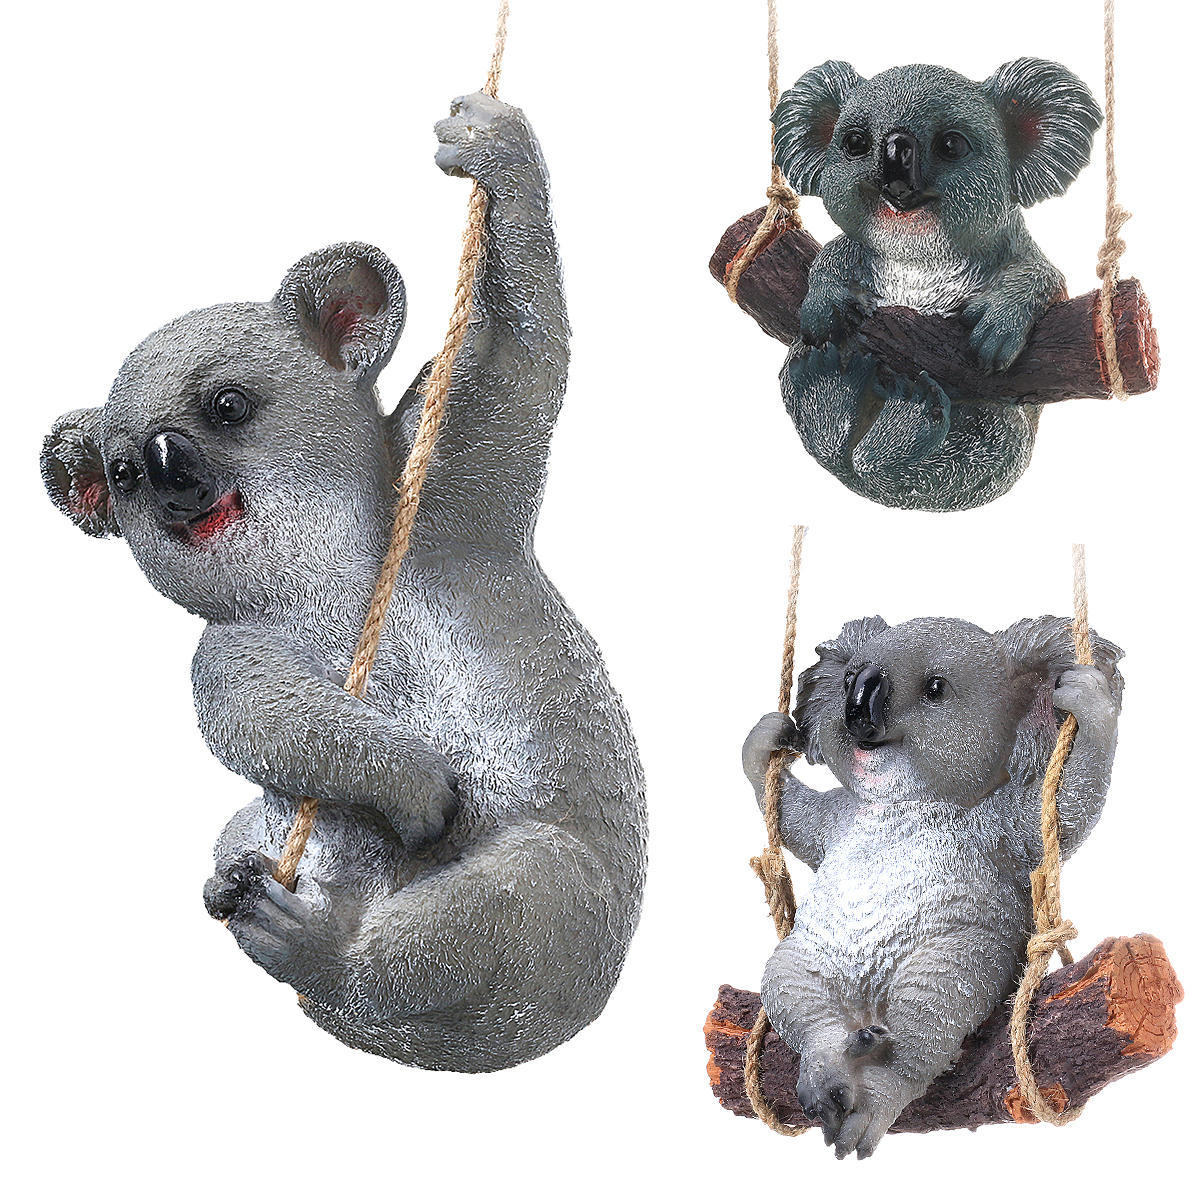 

Cute Koala Hanging Swing Tree Ornament Figurine Statues Garden Sculptures Decorations